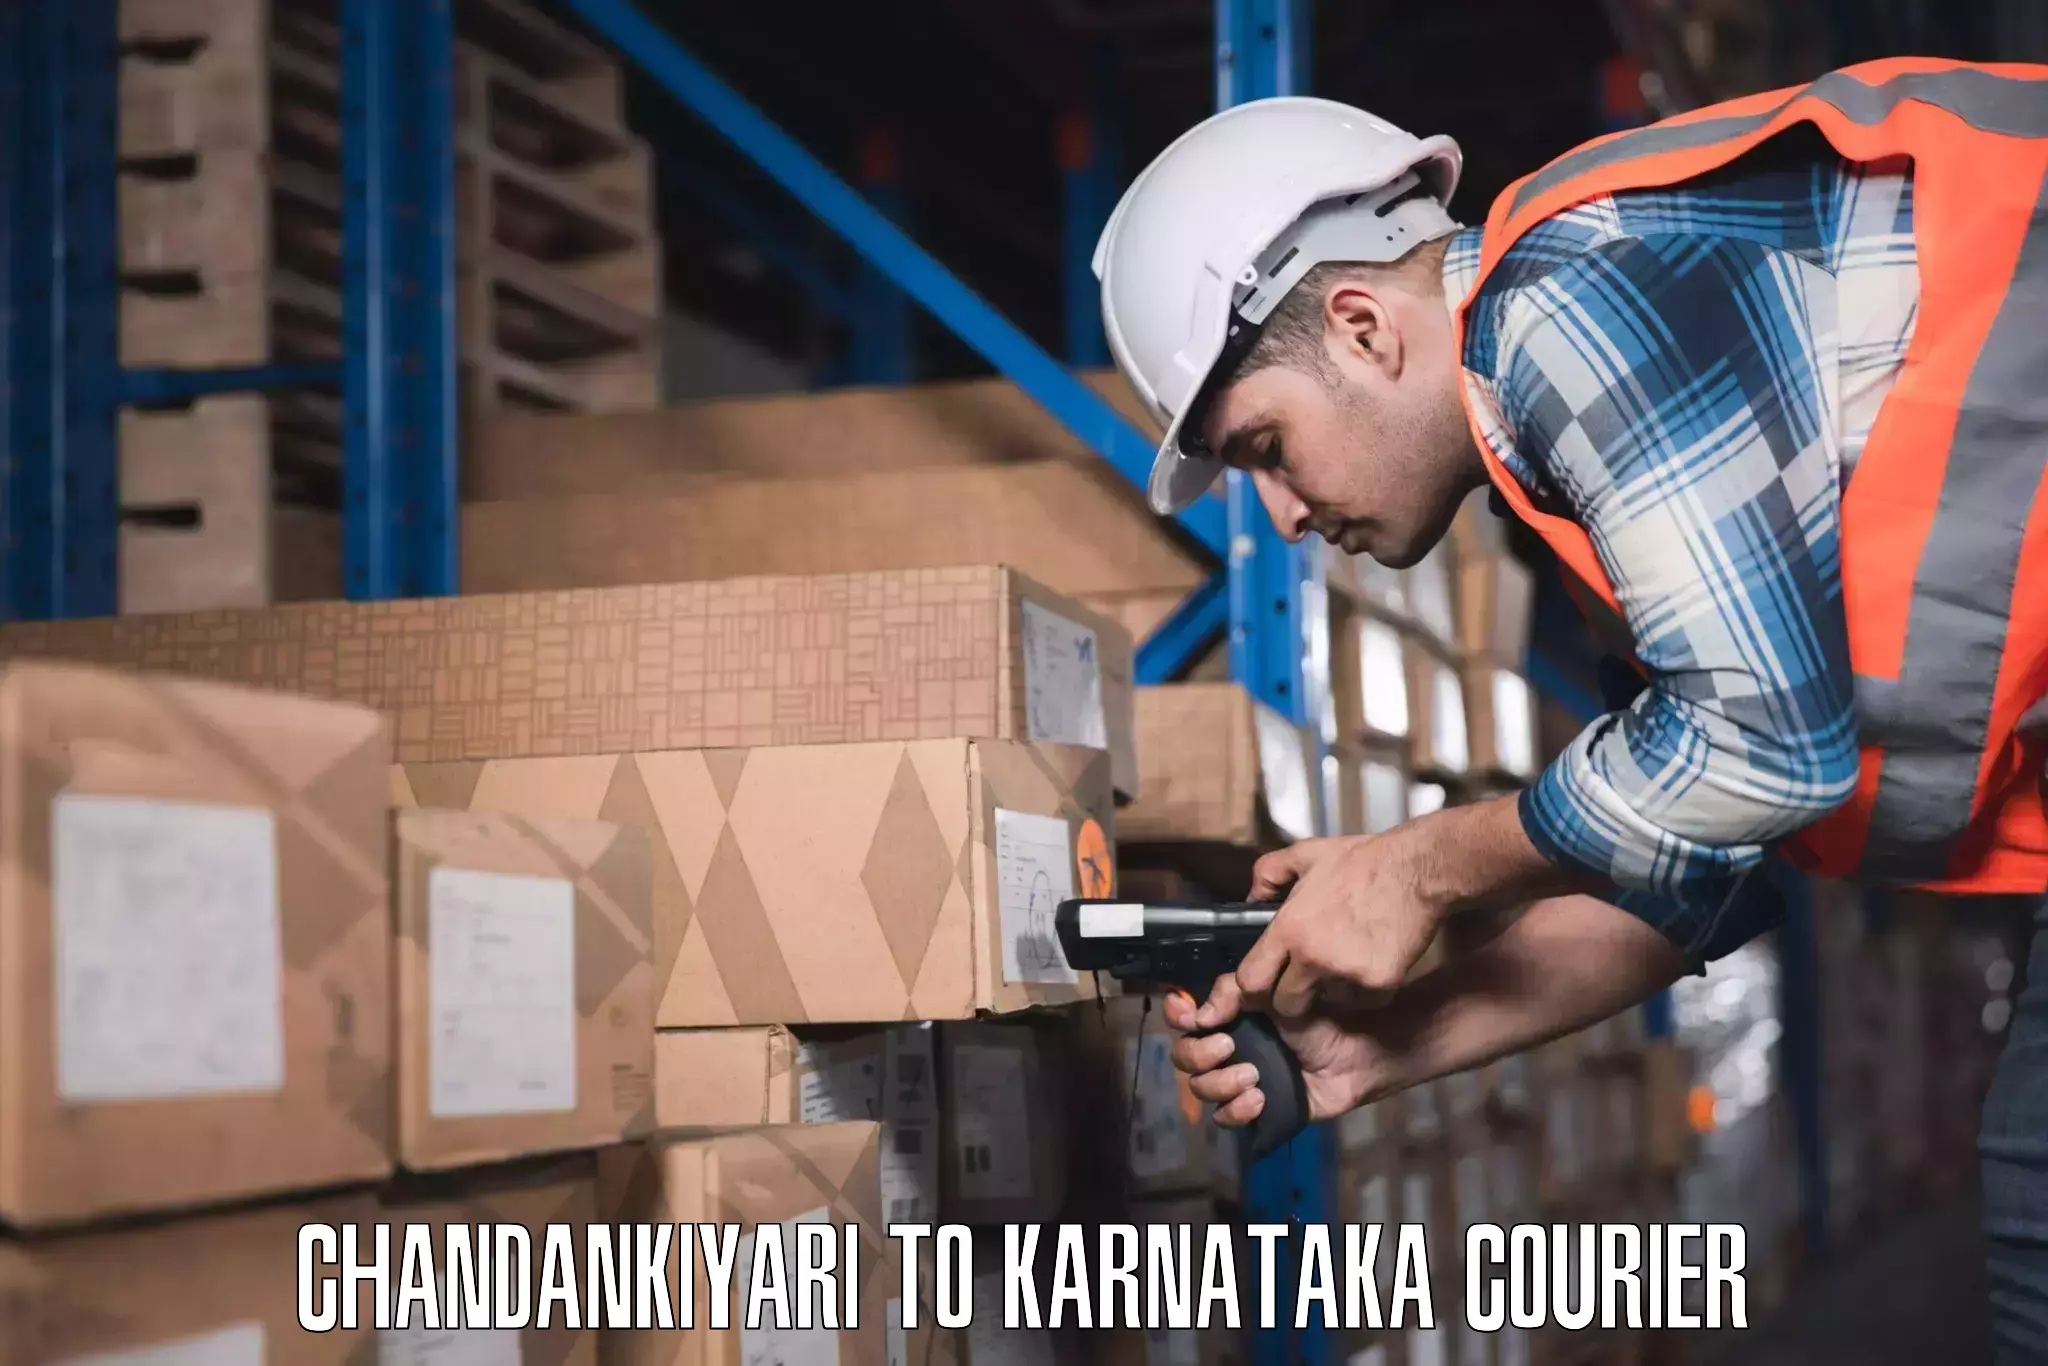 Baggage transport innovation Chandankiyari to Karnataka